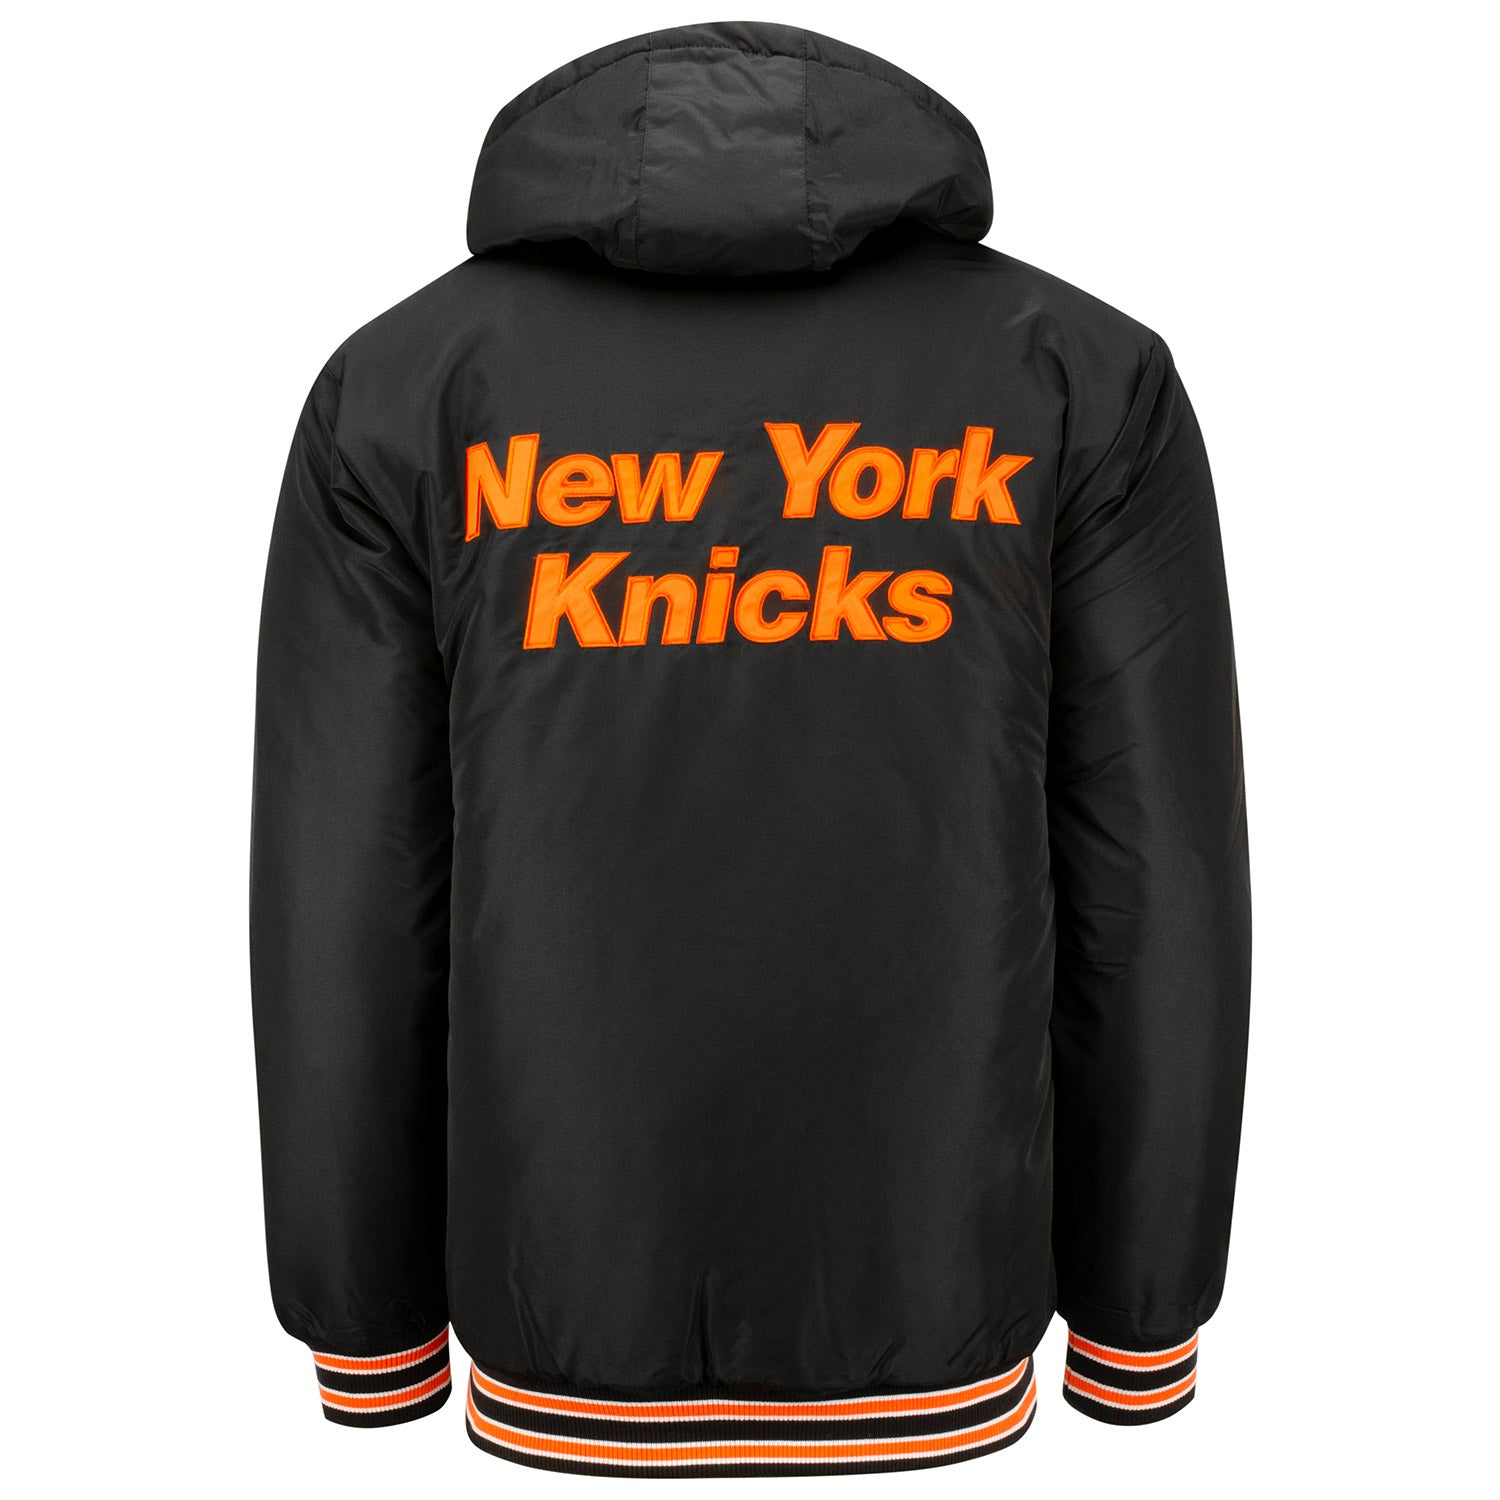 G3 Starter Knicks Hooded Woven Jacket with New York Back In Black & Orange - Back View